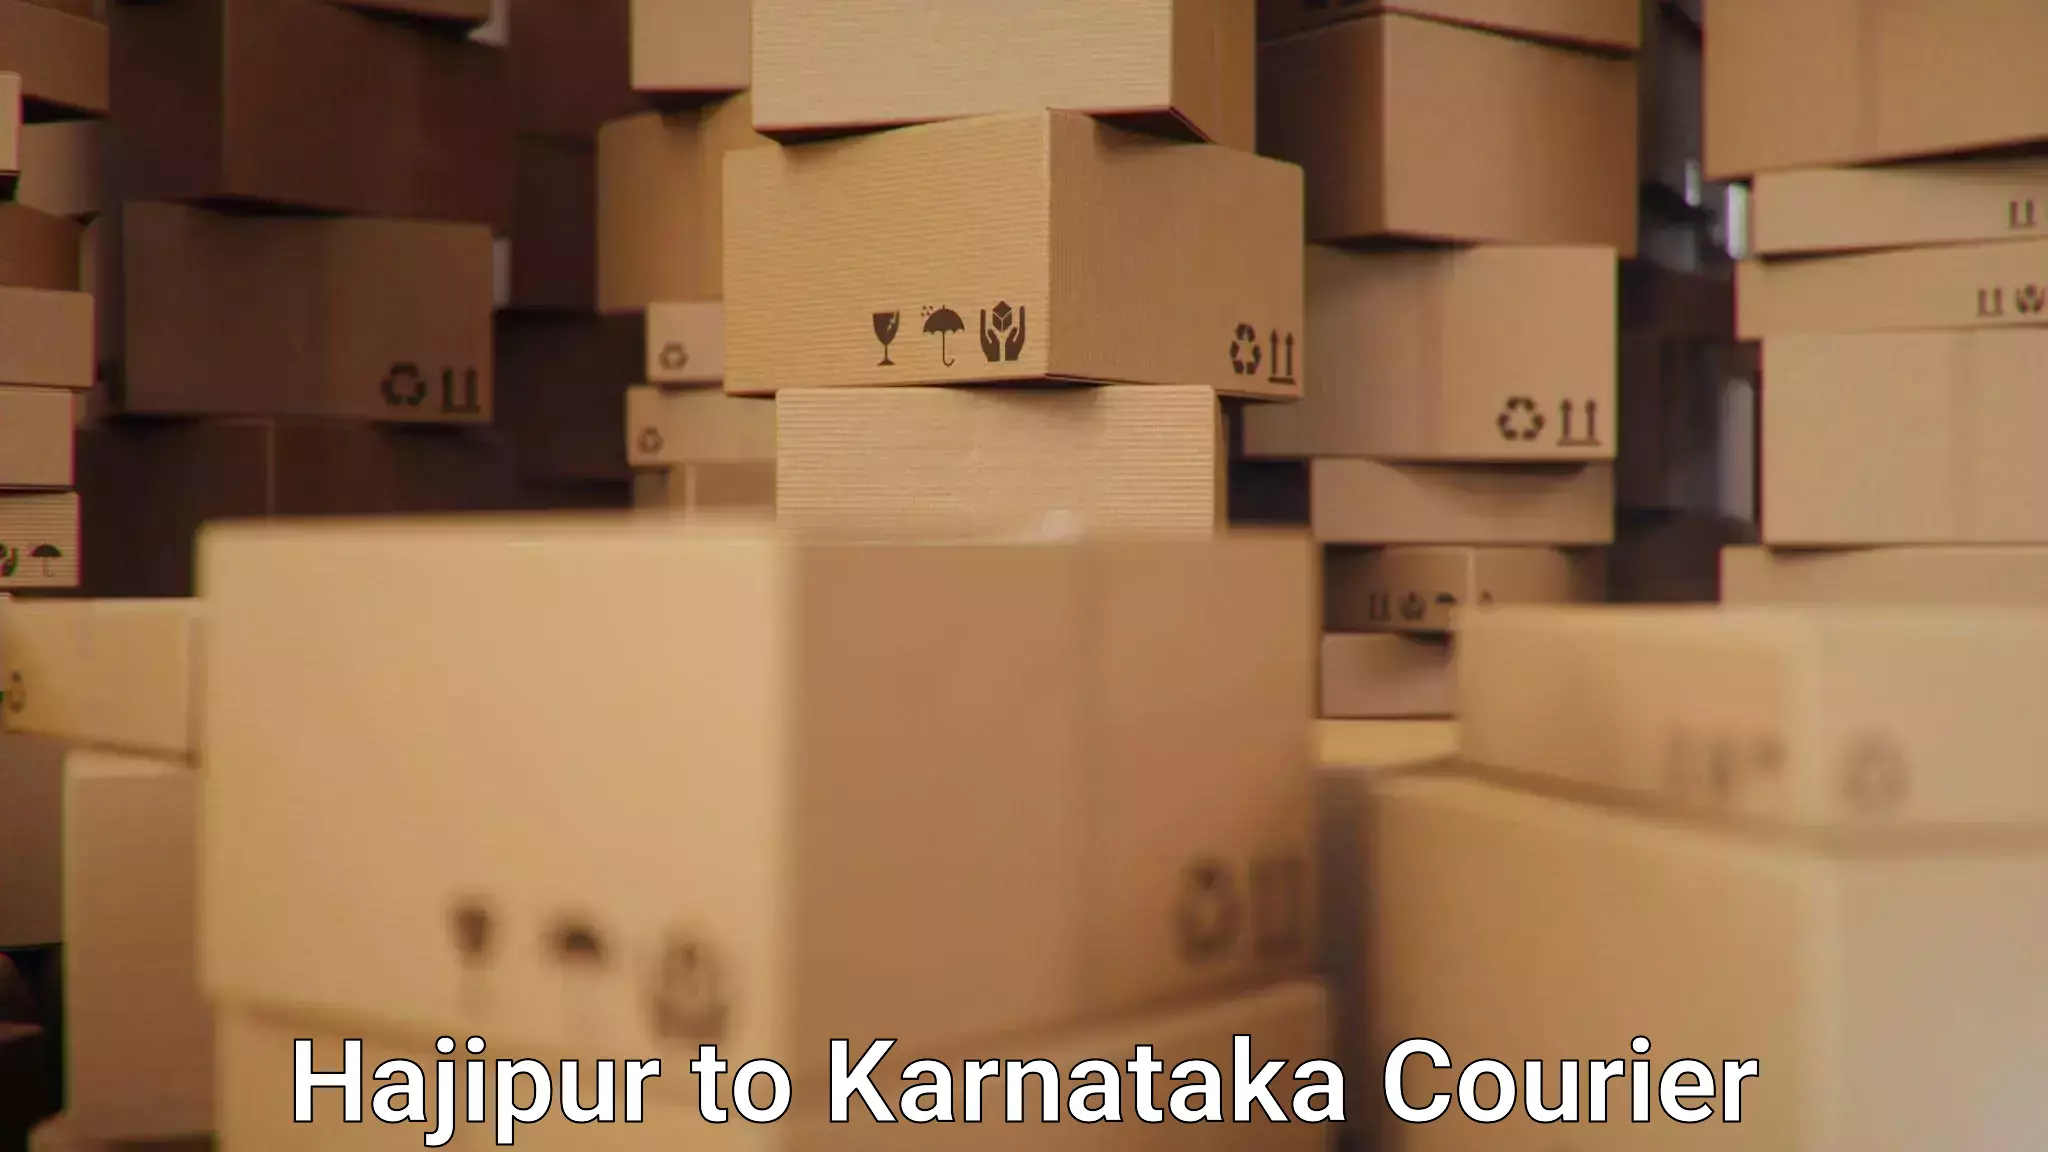 User-friendly delivery service Hajipur to Karnataka